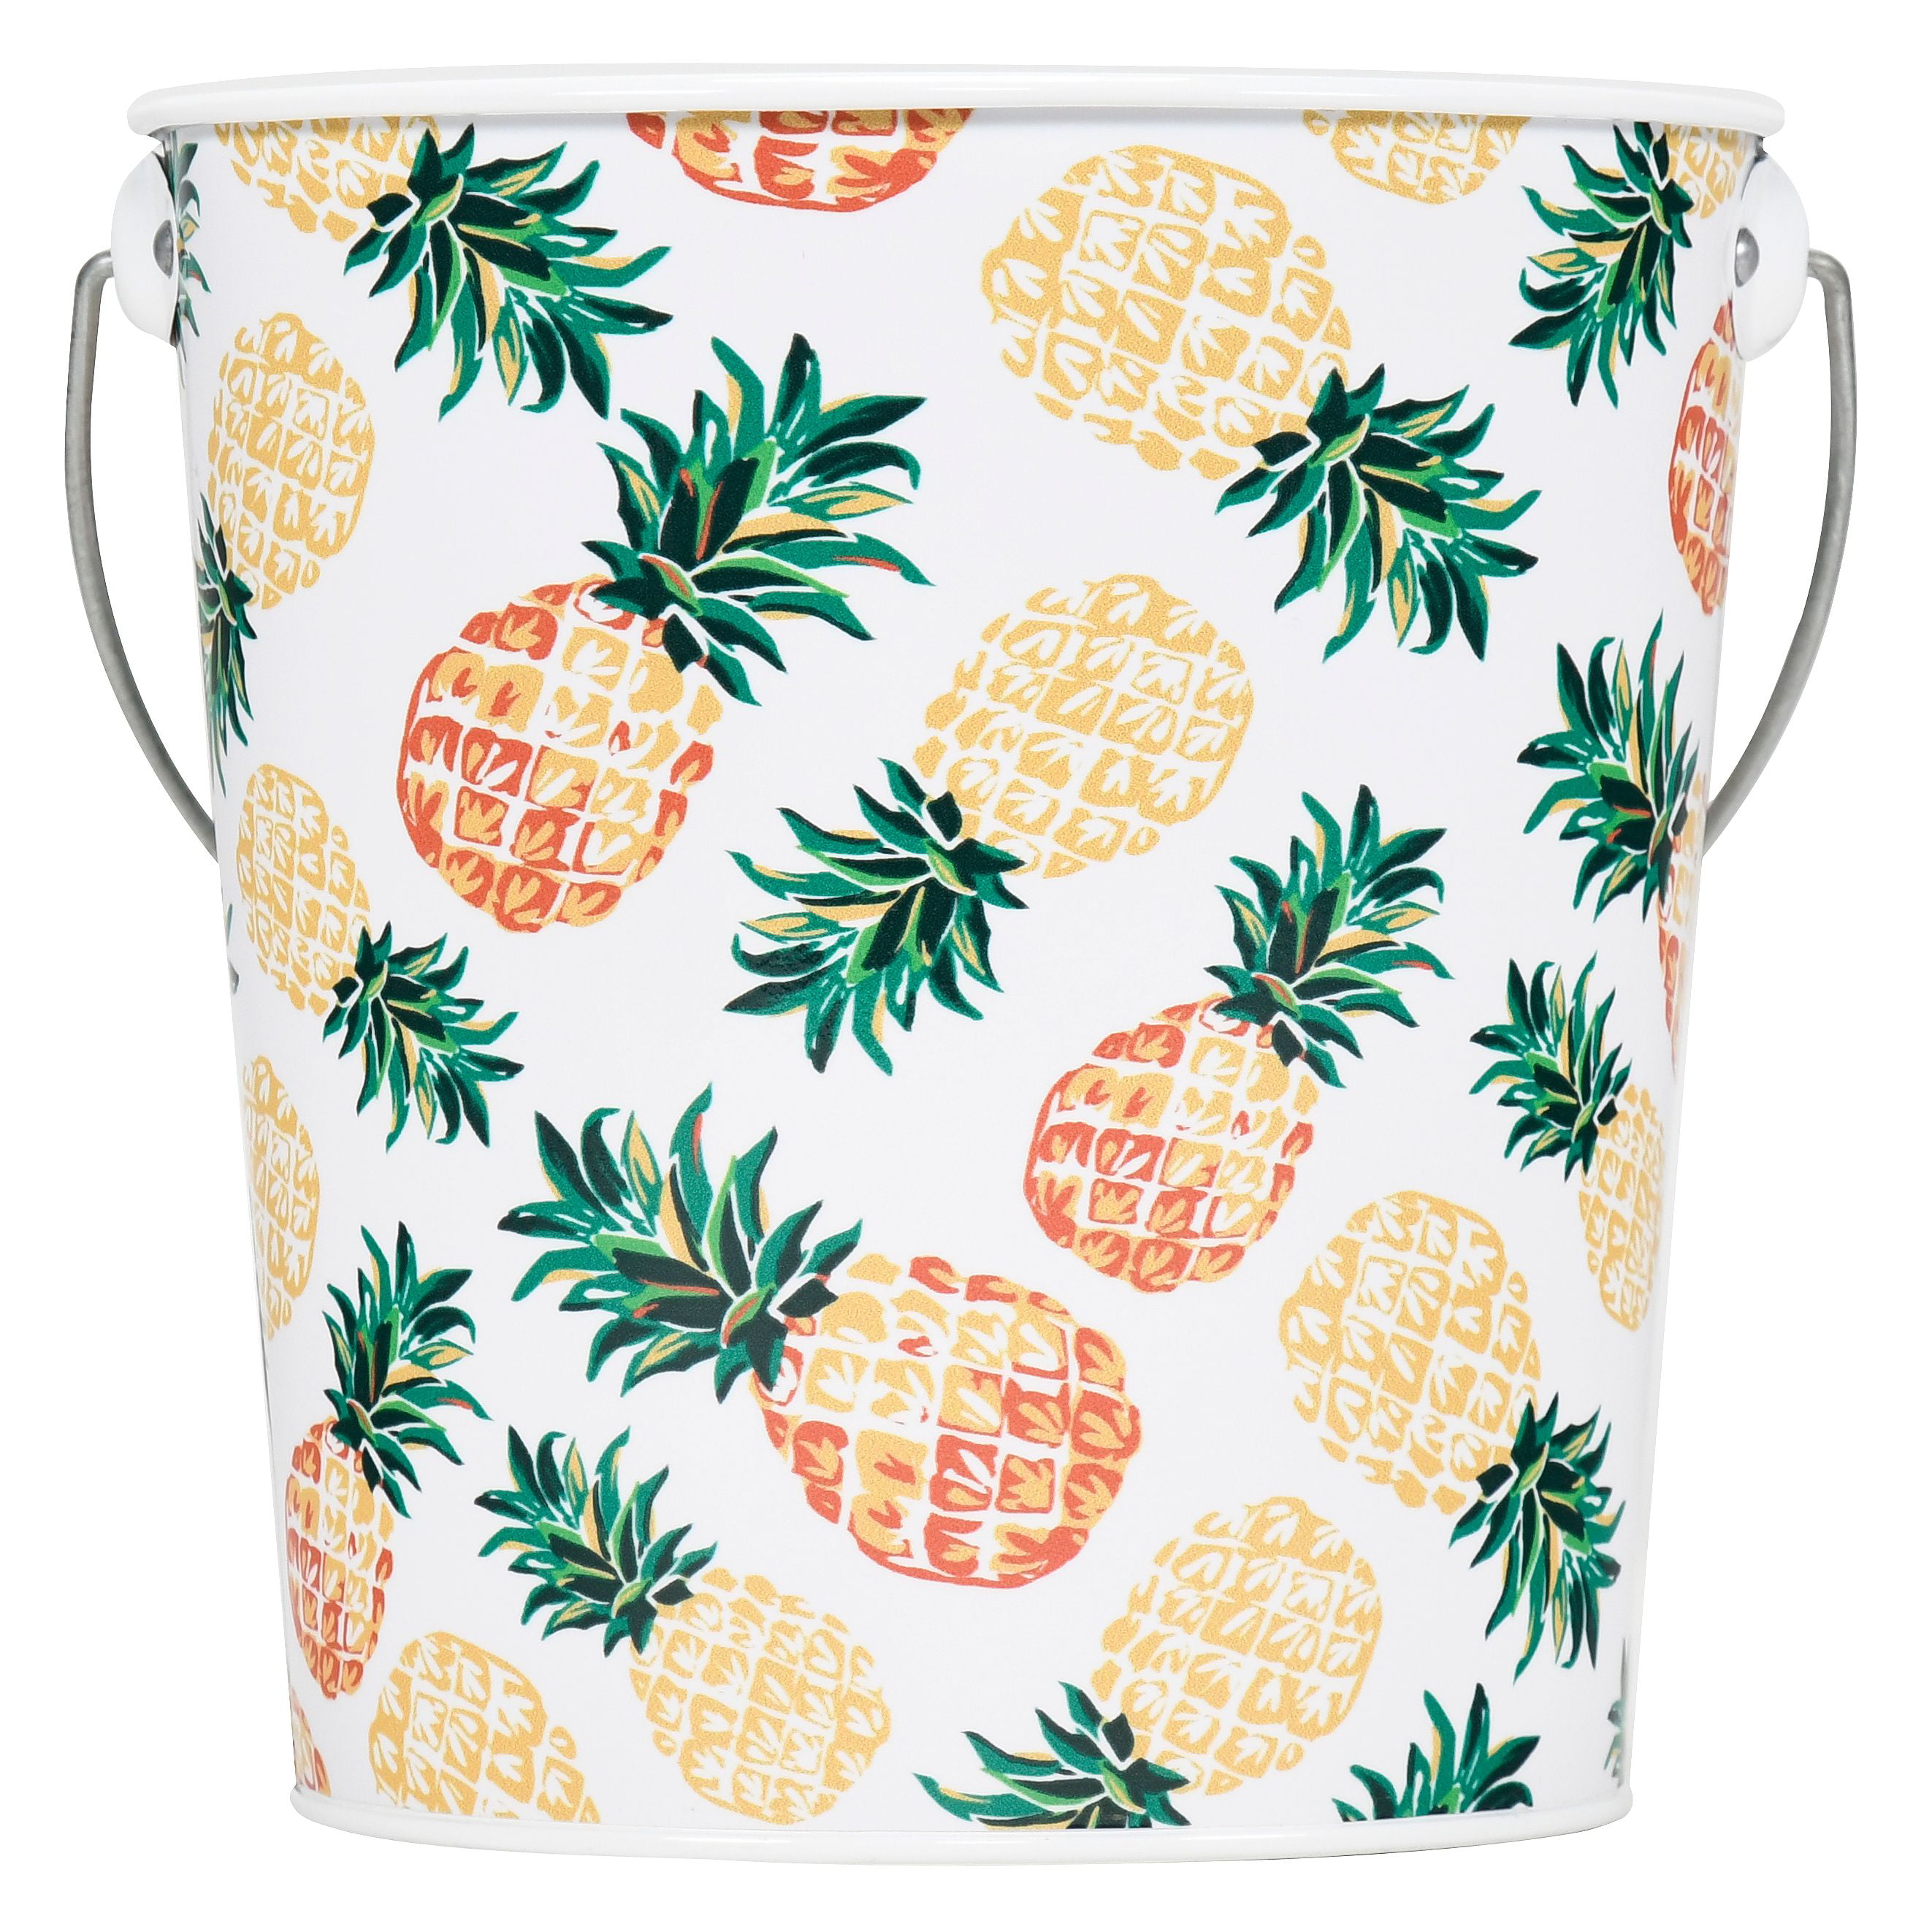 Mainstays Pineapple Bucket - Walmart.com - Walmart.com